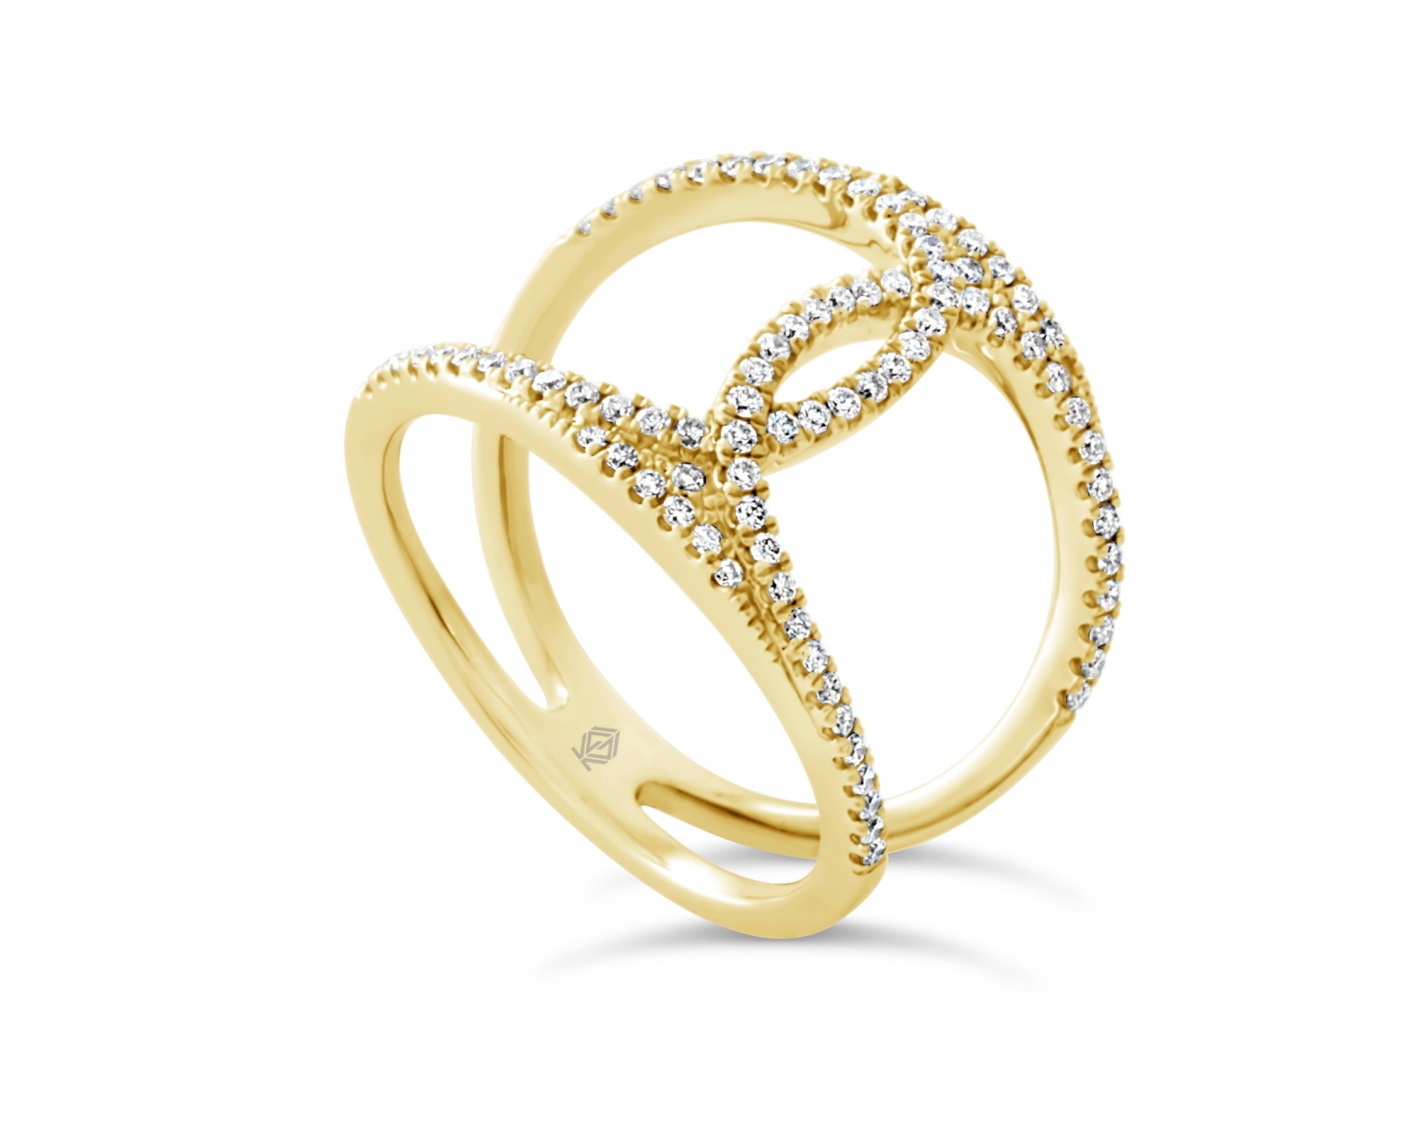 18k white gold cc-fashion round shaped diamond ring Photos & images